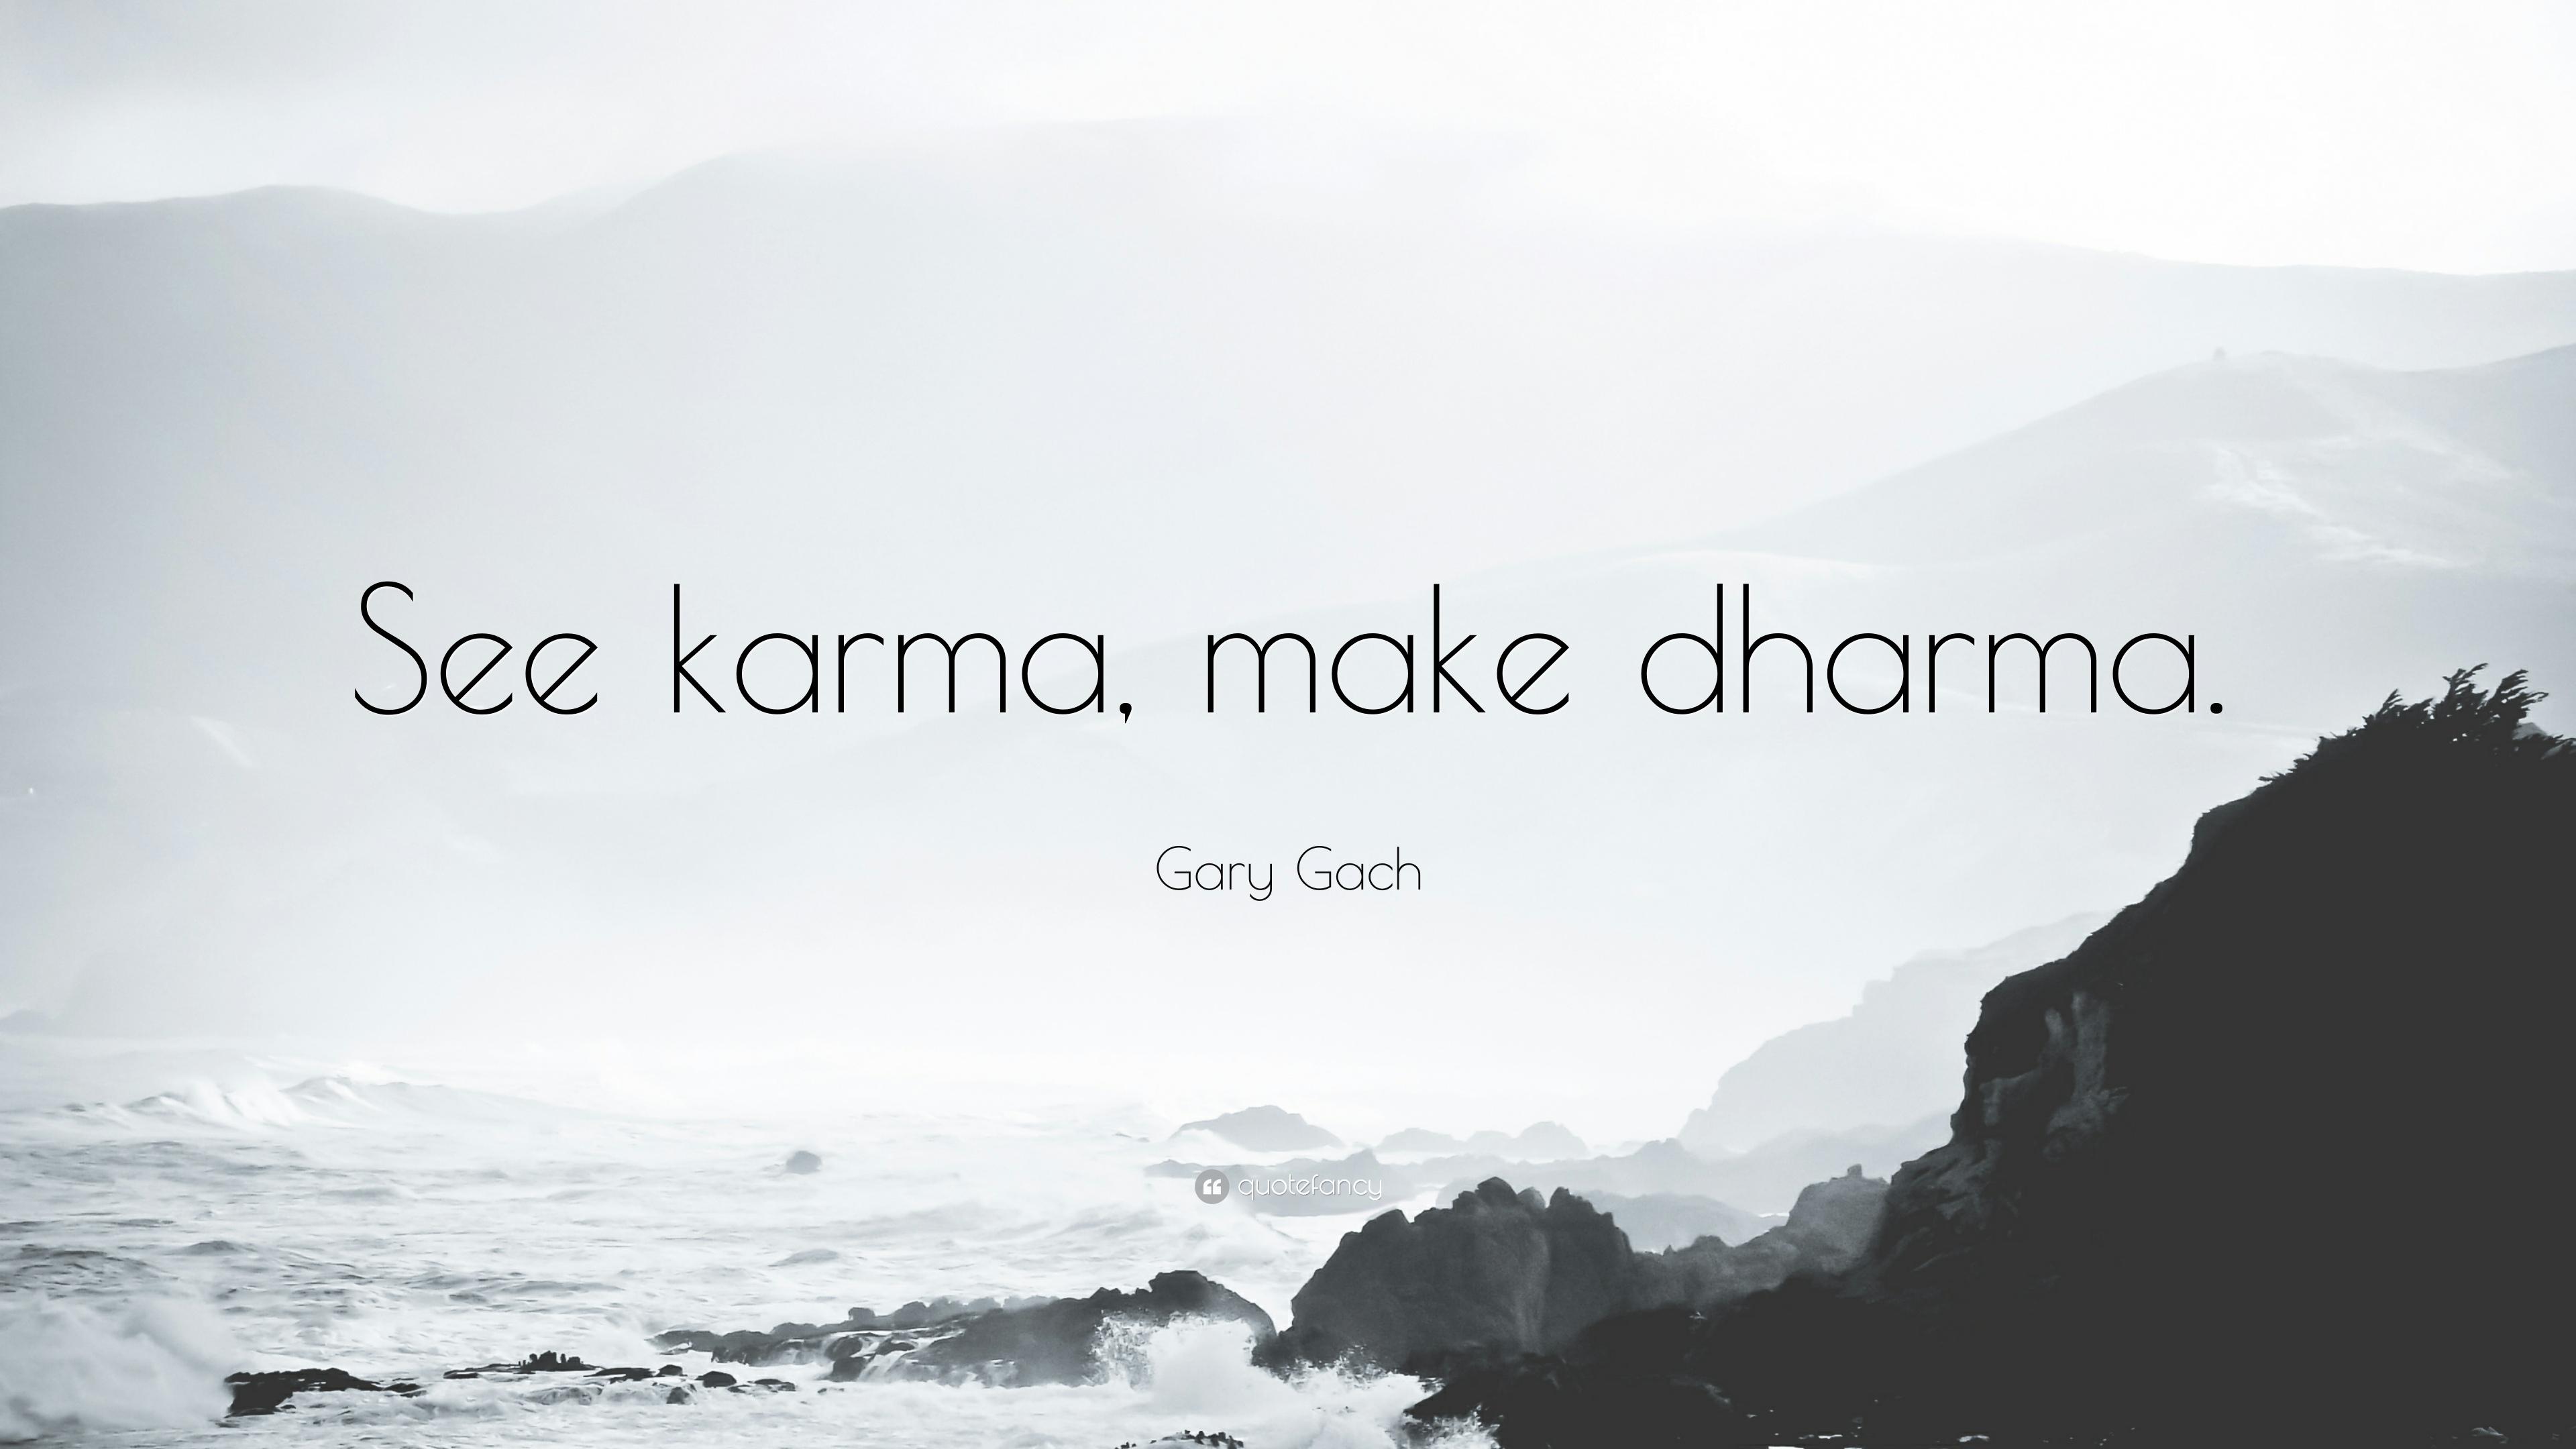 Gary Gach Quote: “See karma, make dharma.” (12 wallpaper)